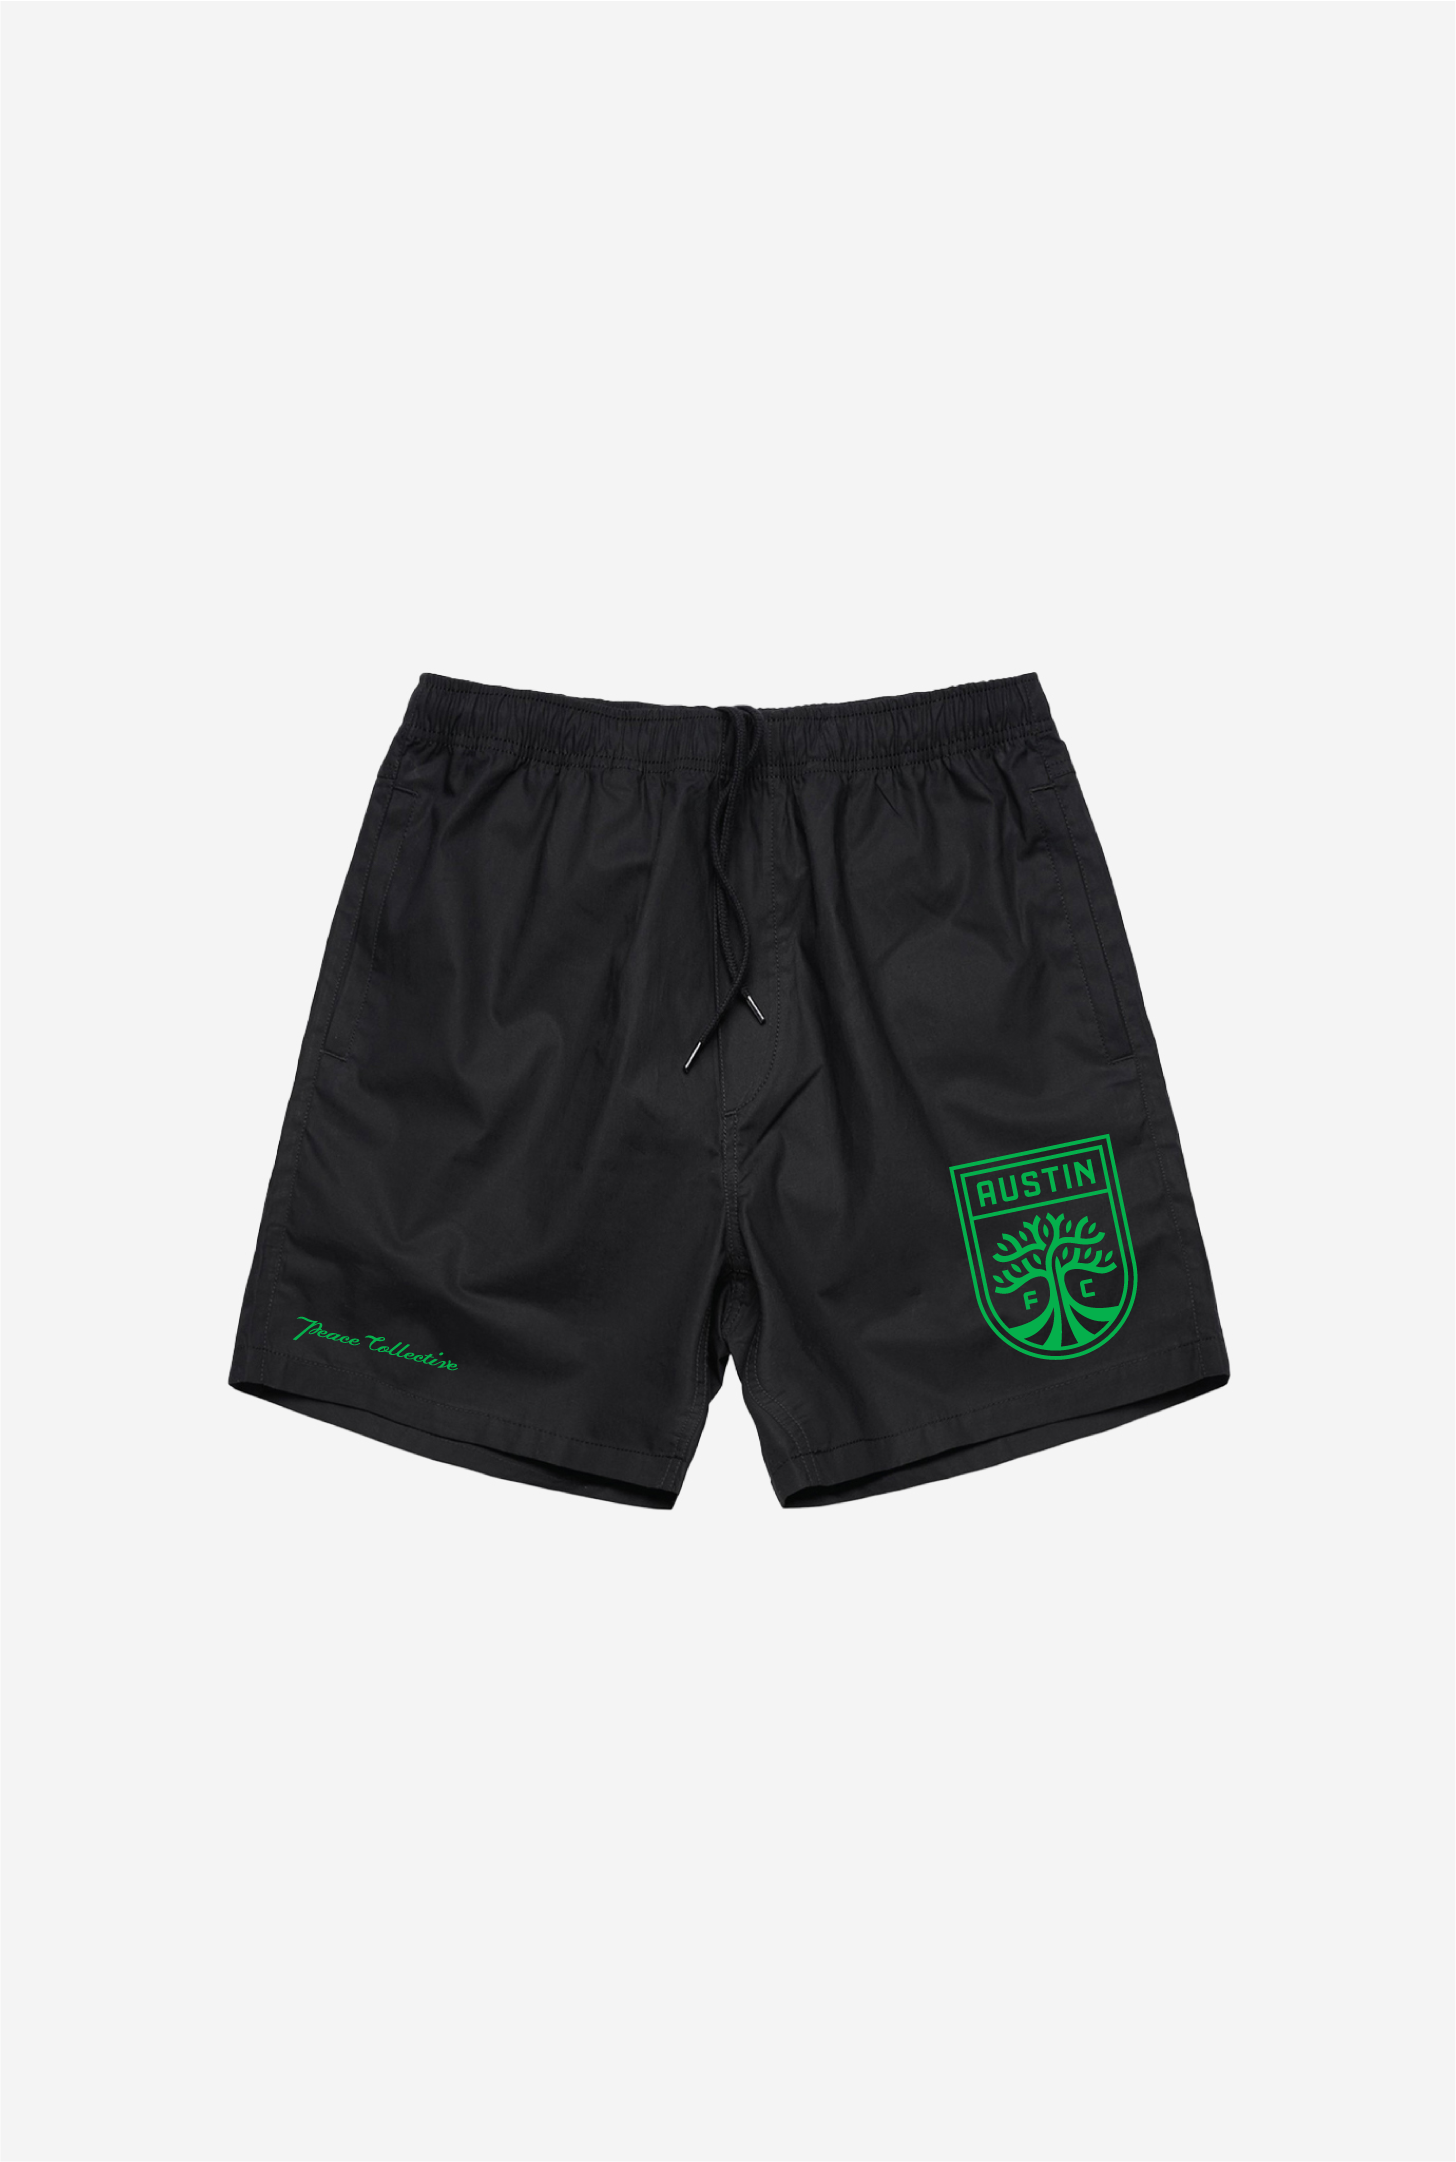 Austin FC Board Shorts - Black